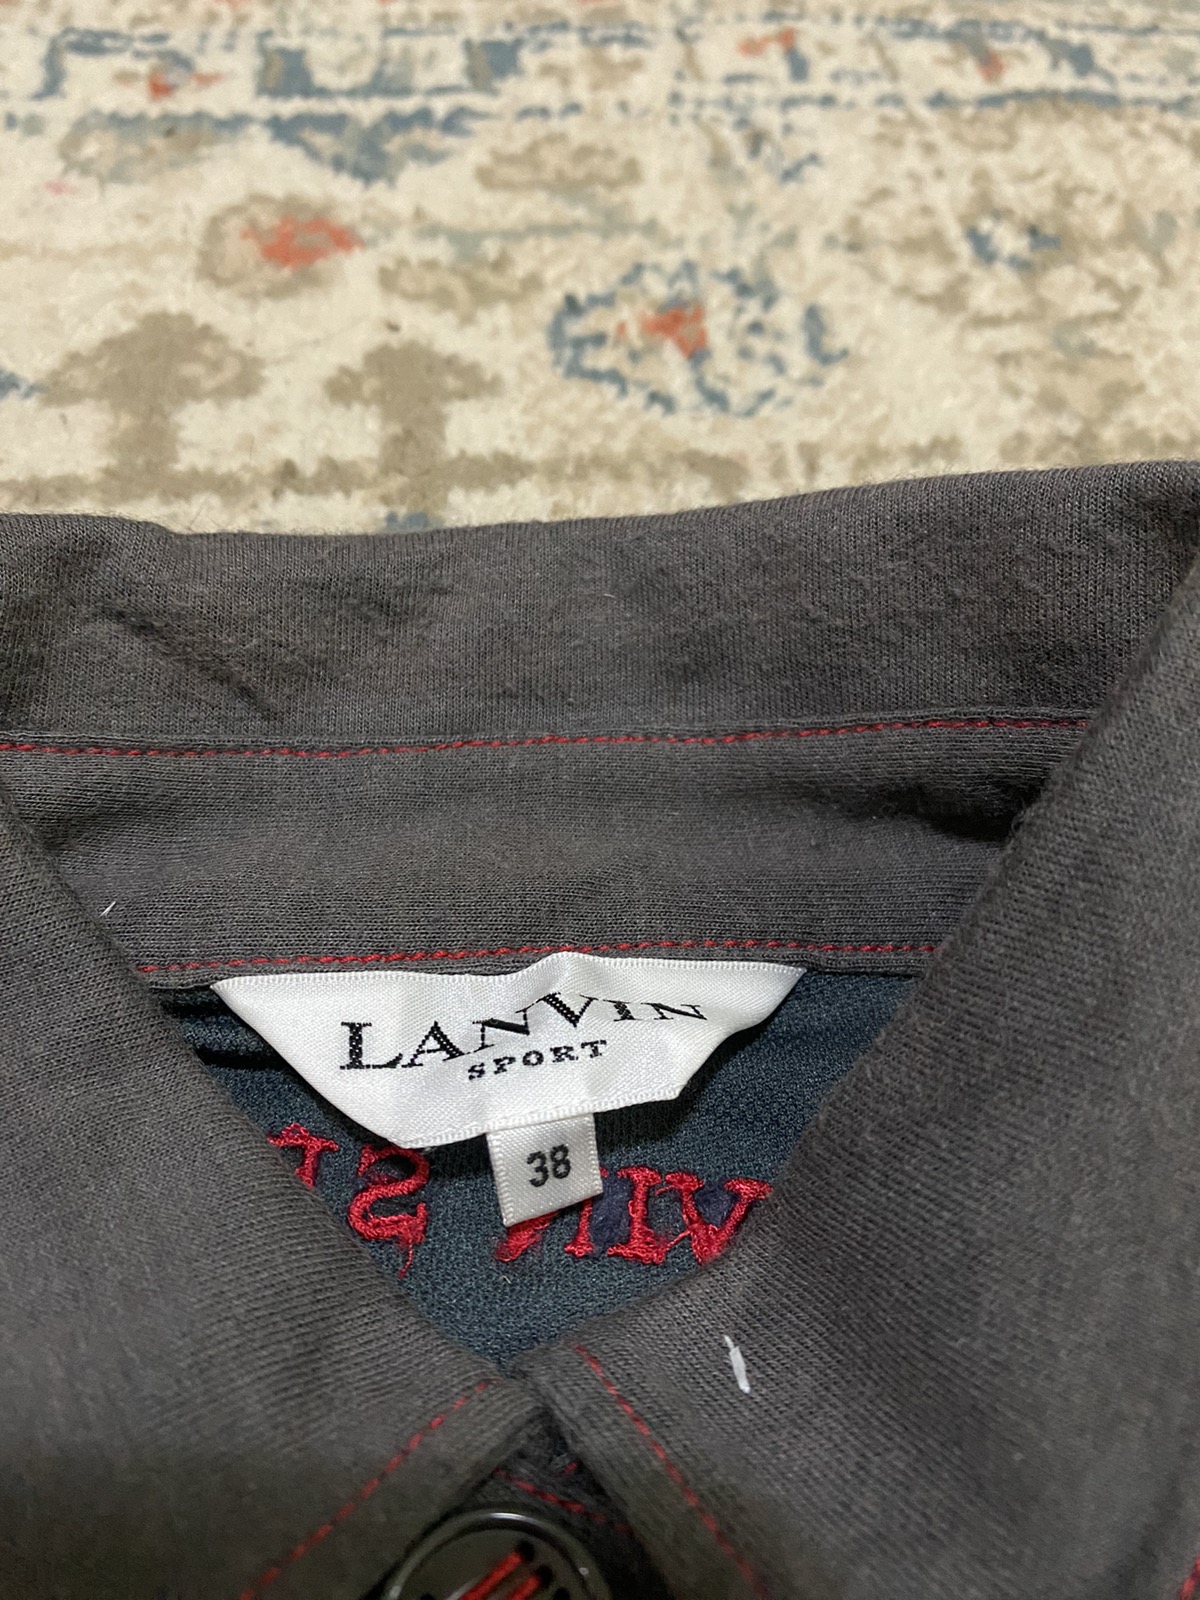 Vintage Lanvin Sport Long Sleeve Size 38 - 4